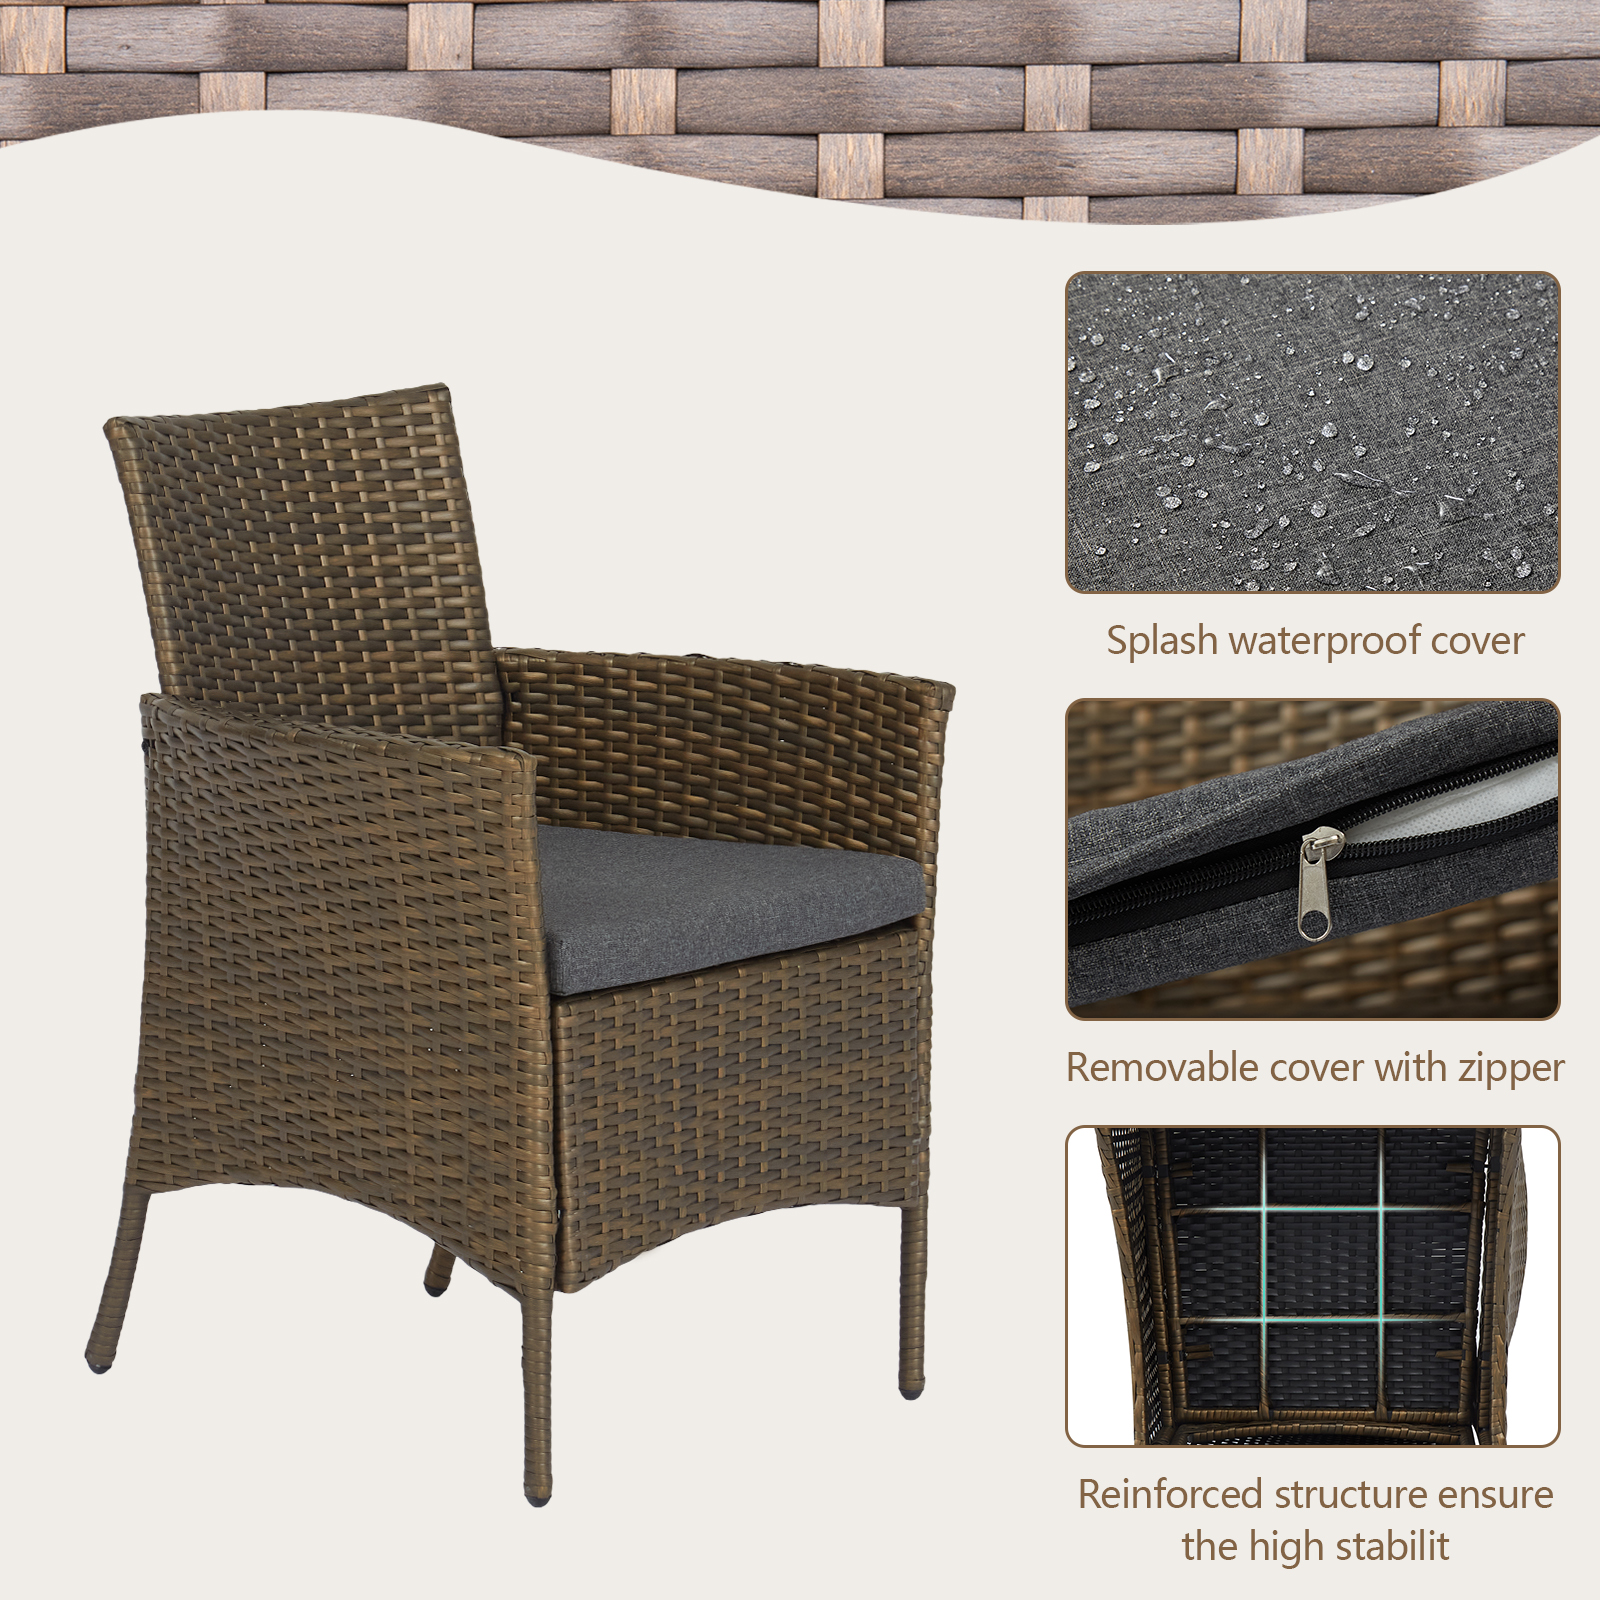 Kinbor 3pcs Rattan Wicker Chair Set with Side Table, Dark Grey - image 3 of 7